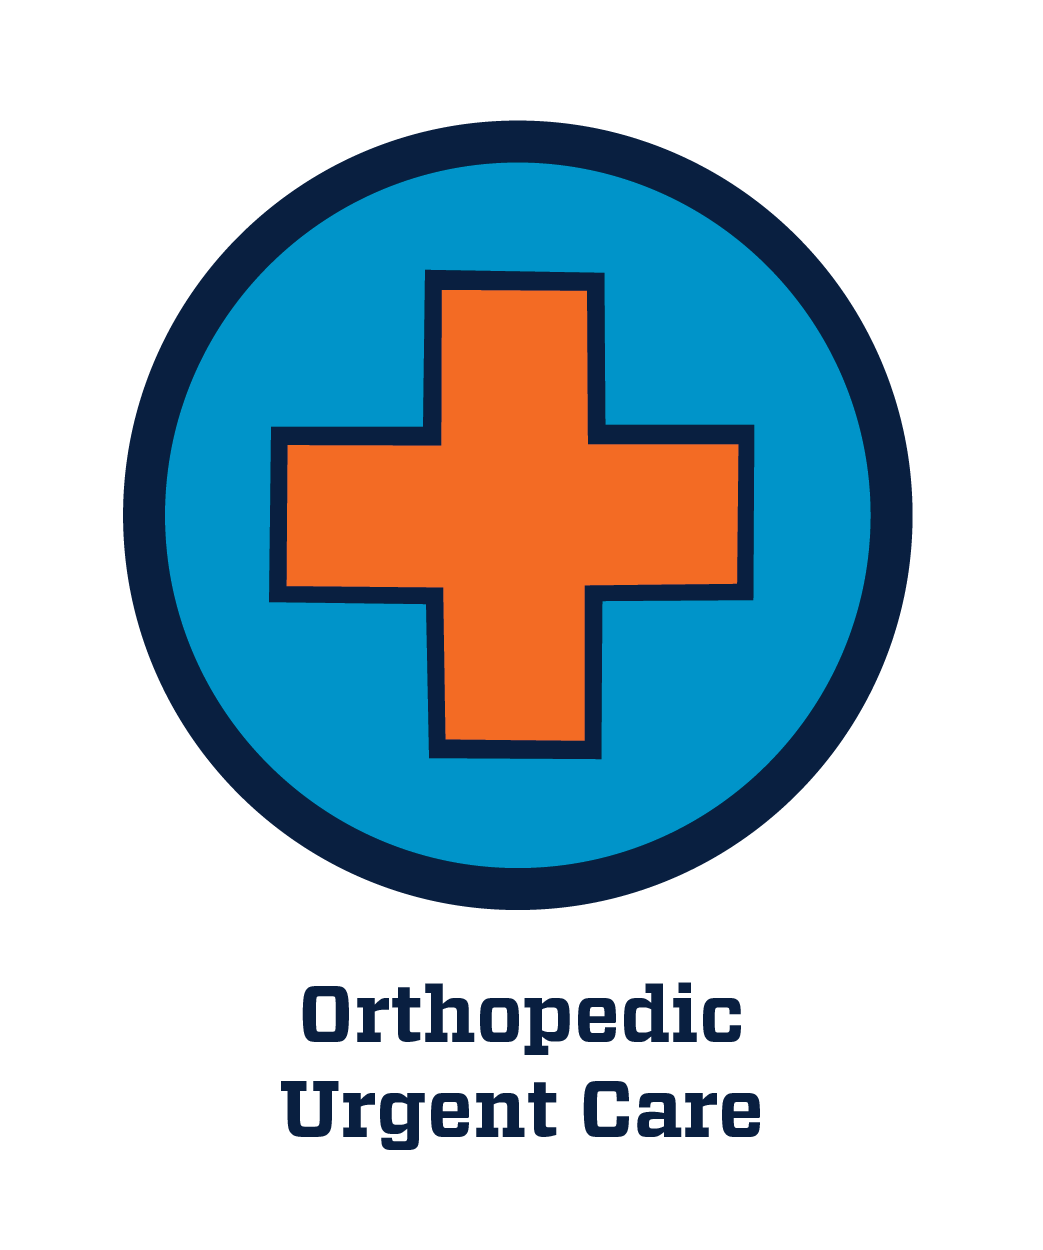  Orthopedic Urgent Care Services 